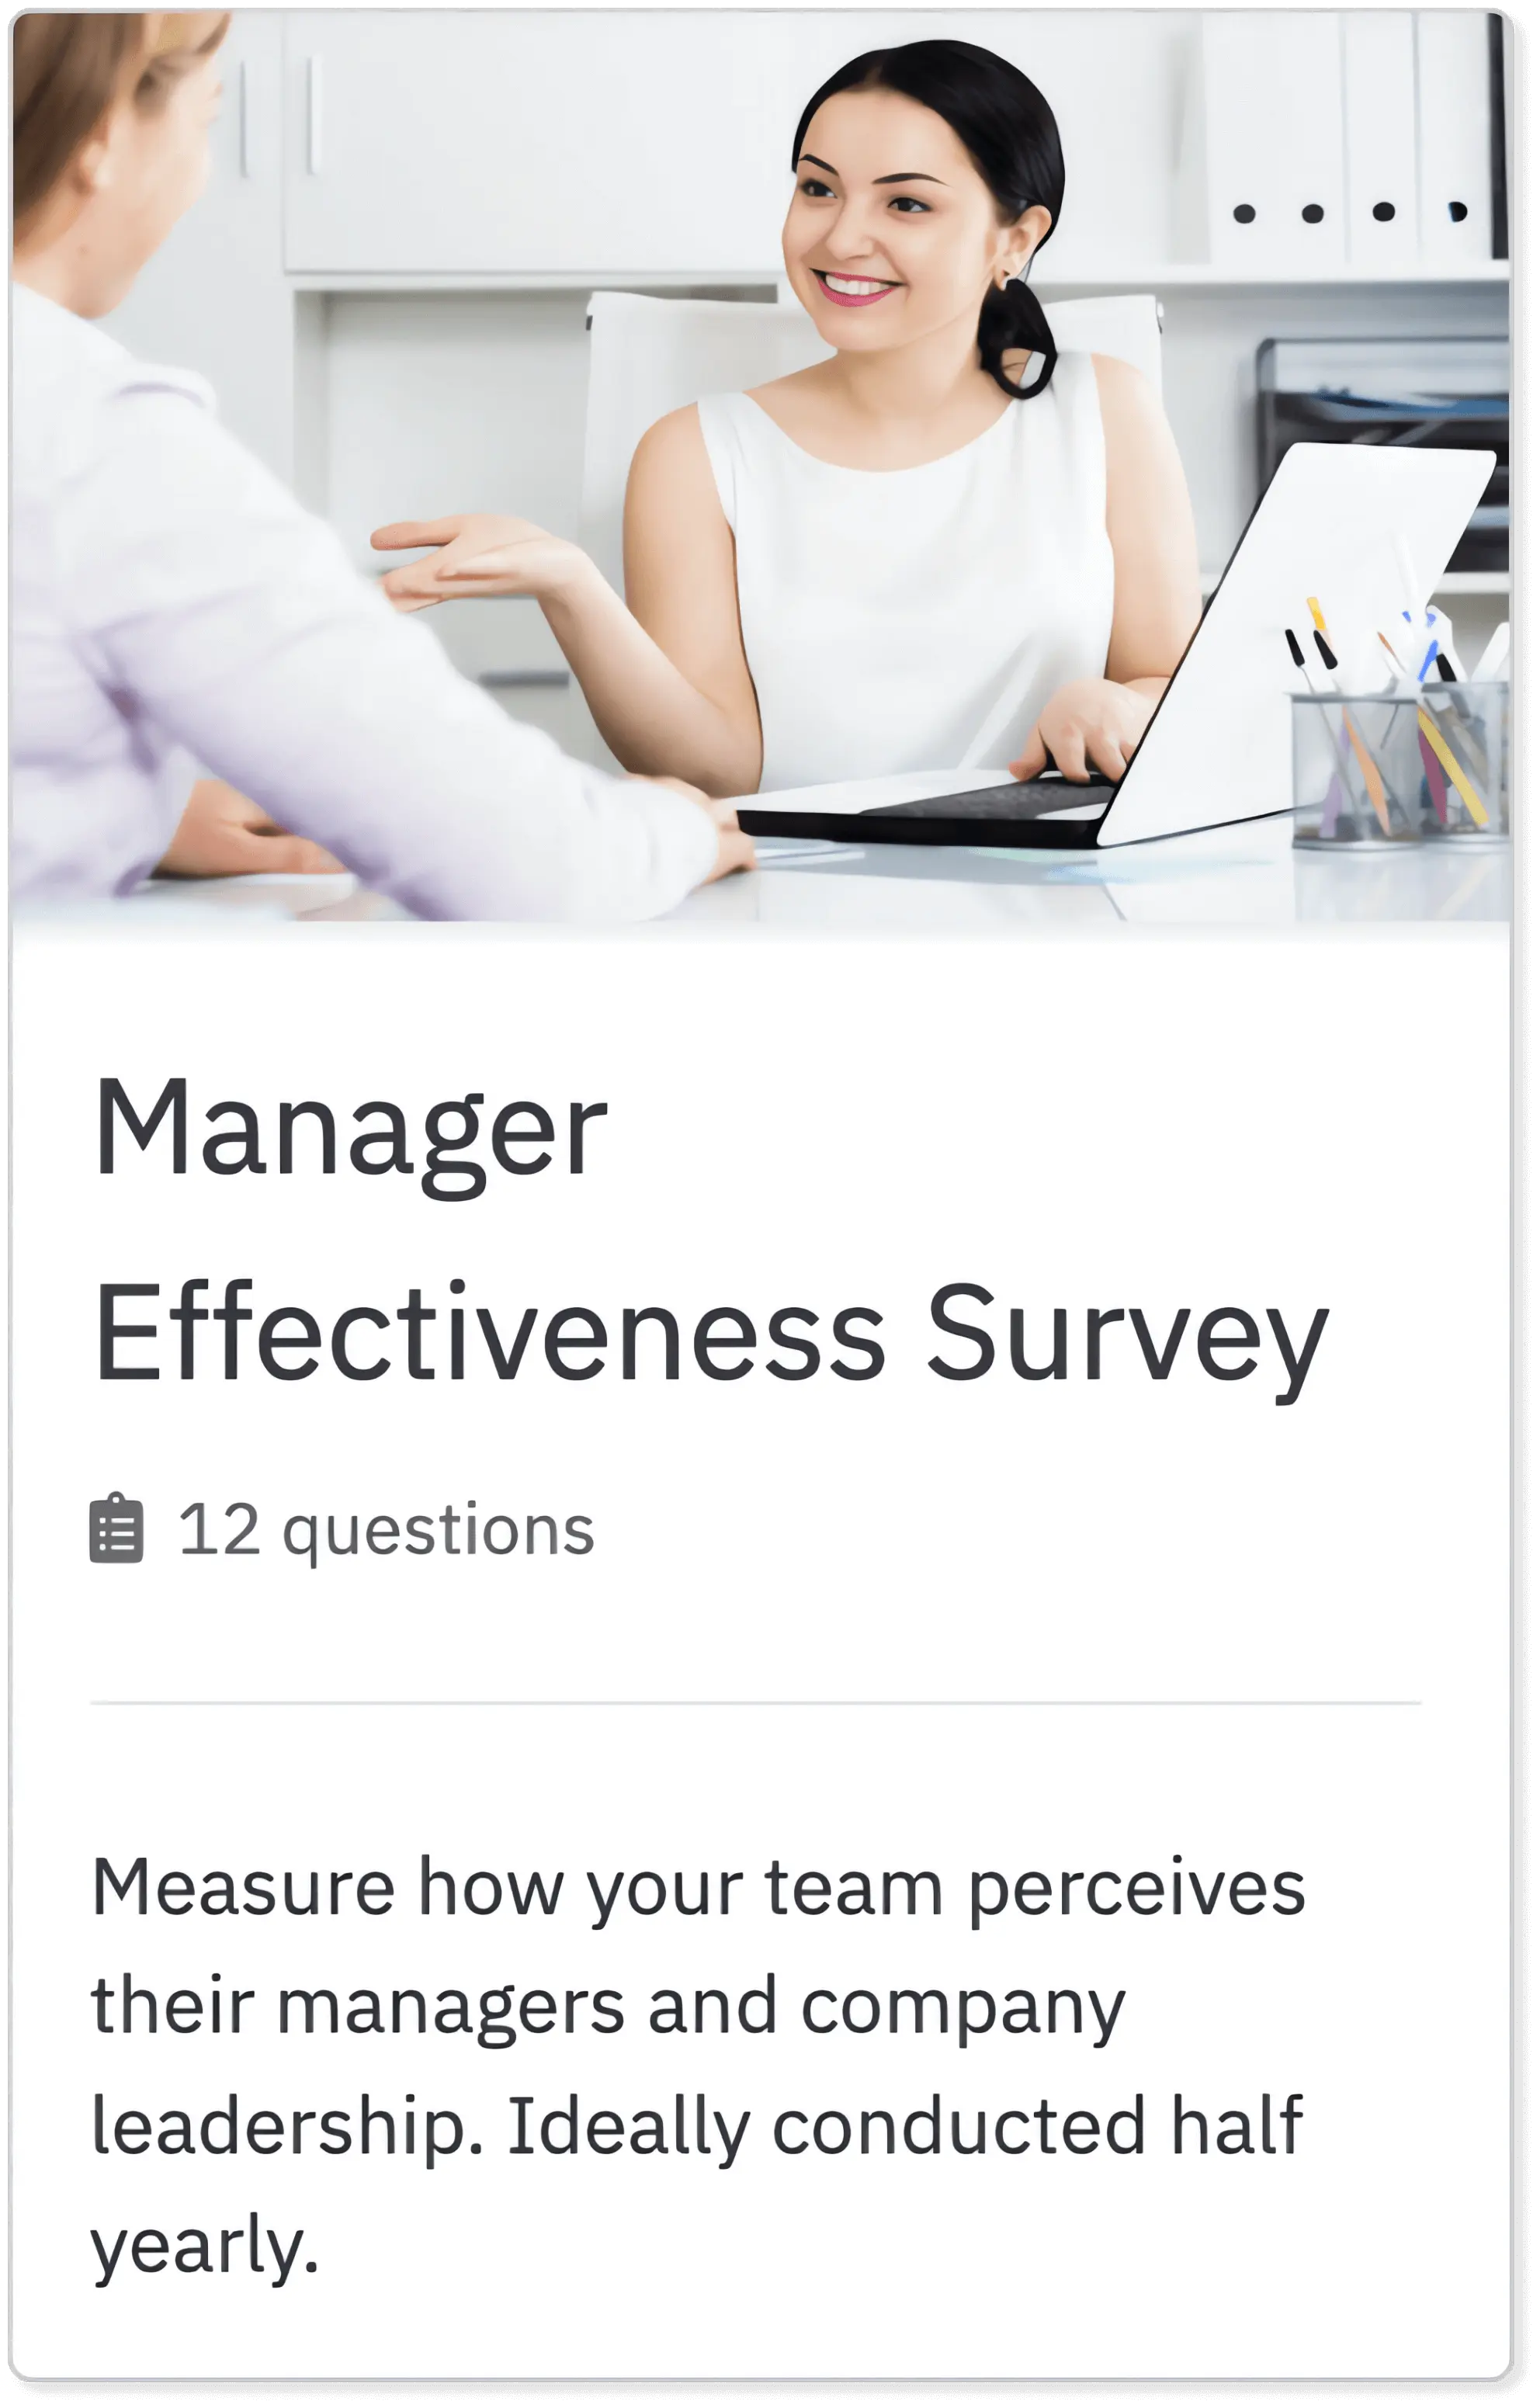 Send manager effectiveness surveys to gauge team experience